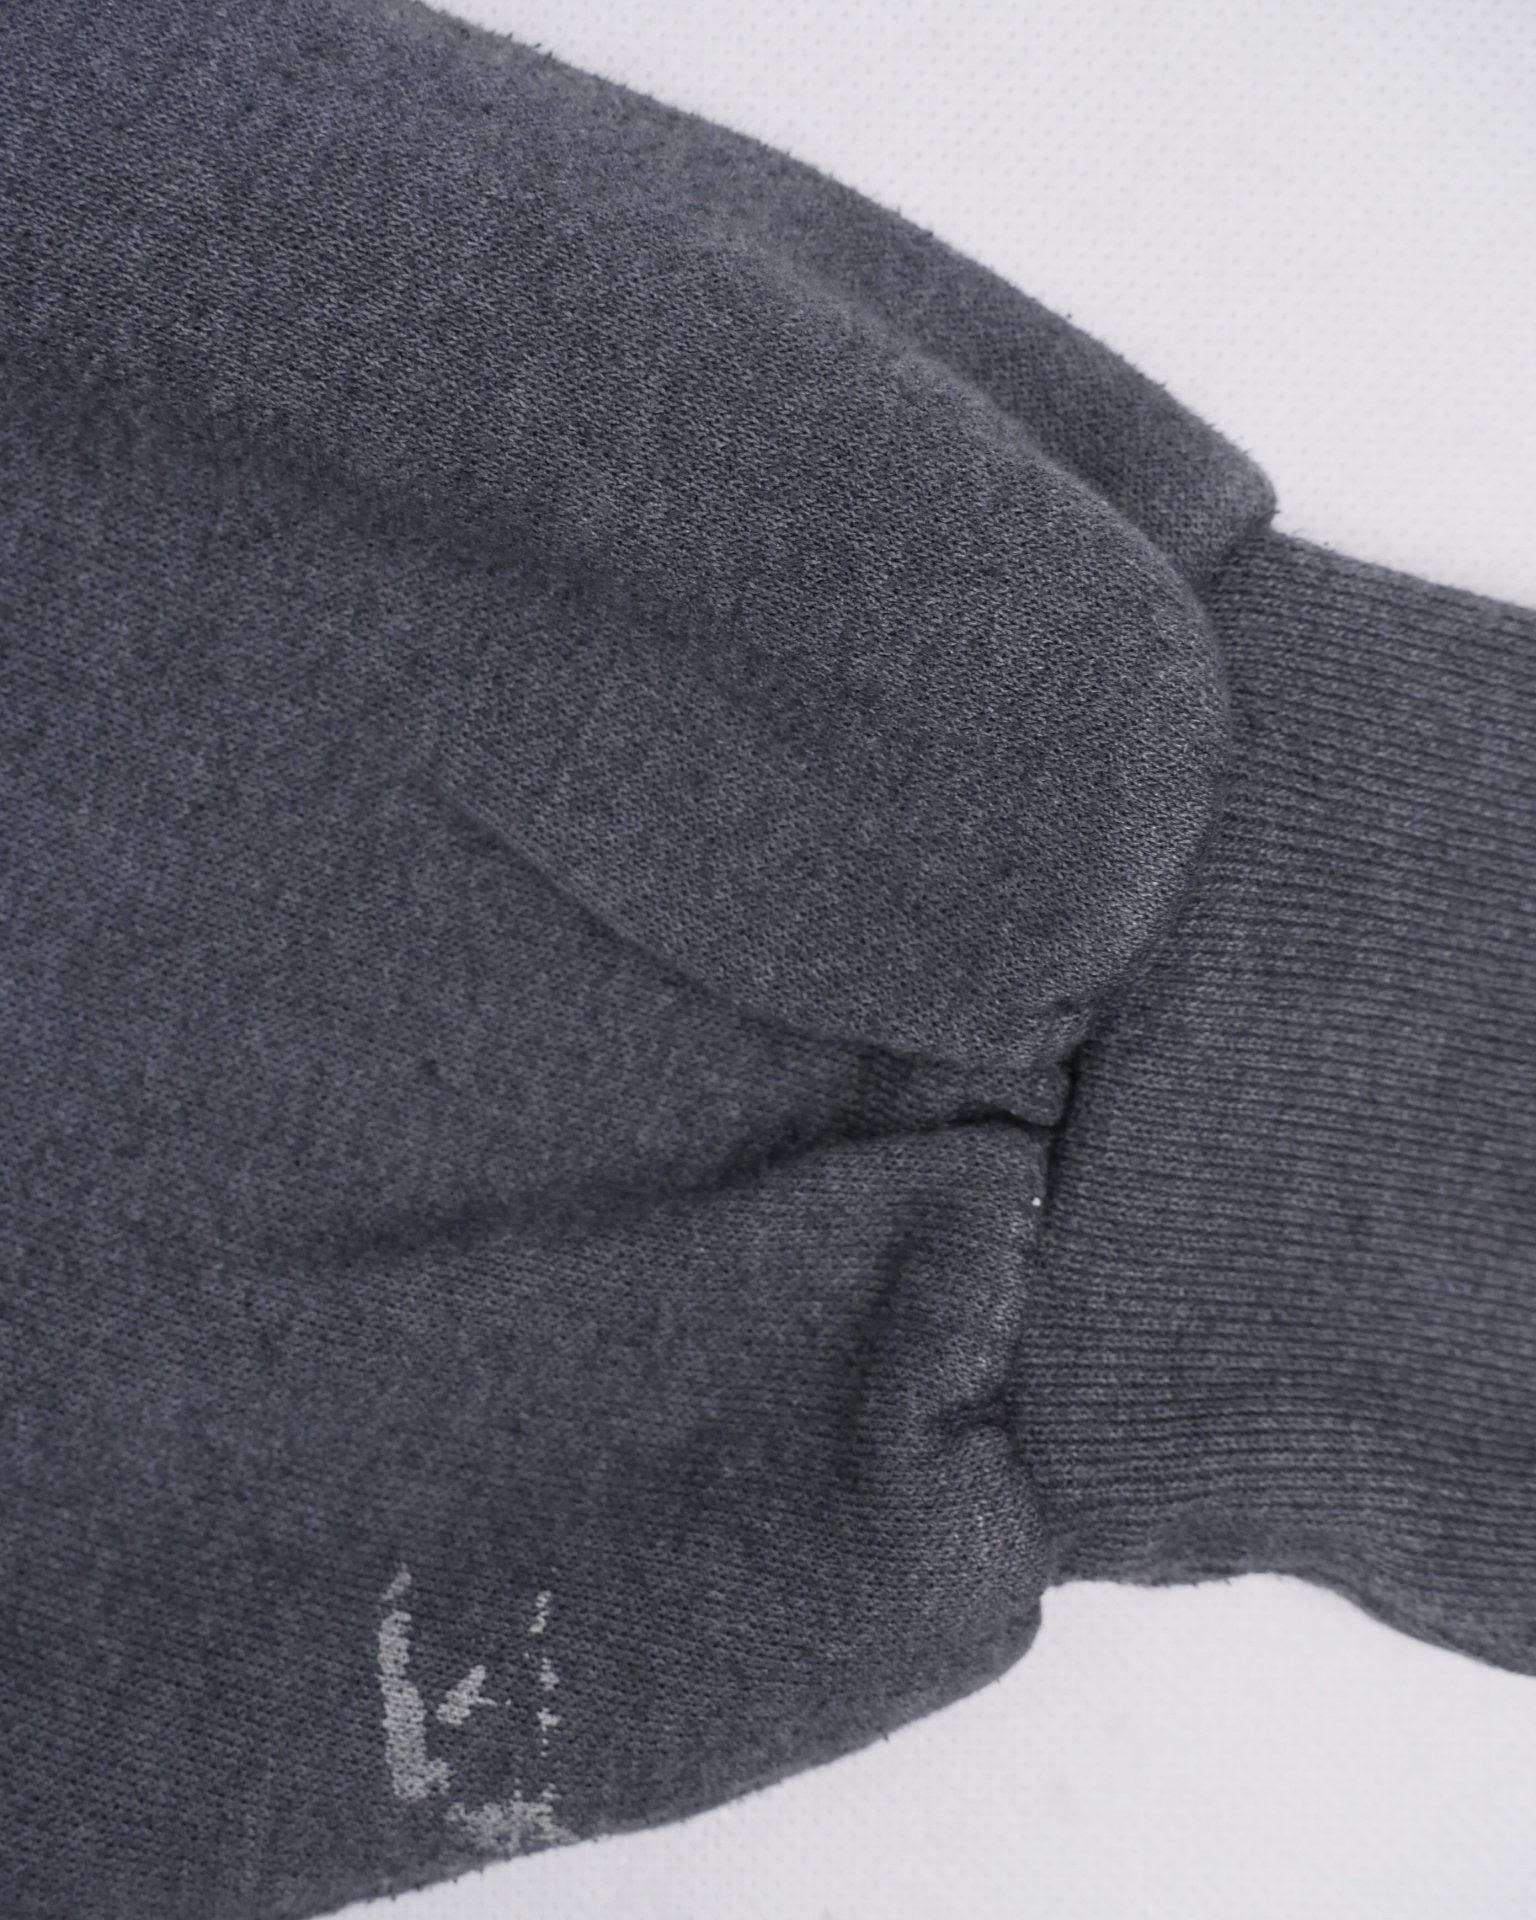 'Eagle' printed Graphic grey Vintage Sweater - Peeces